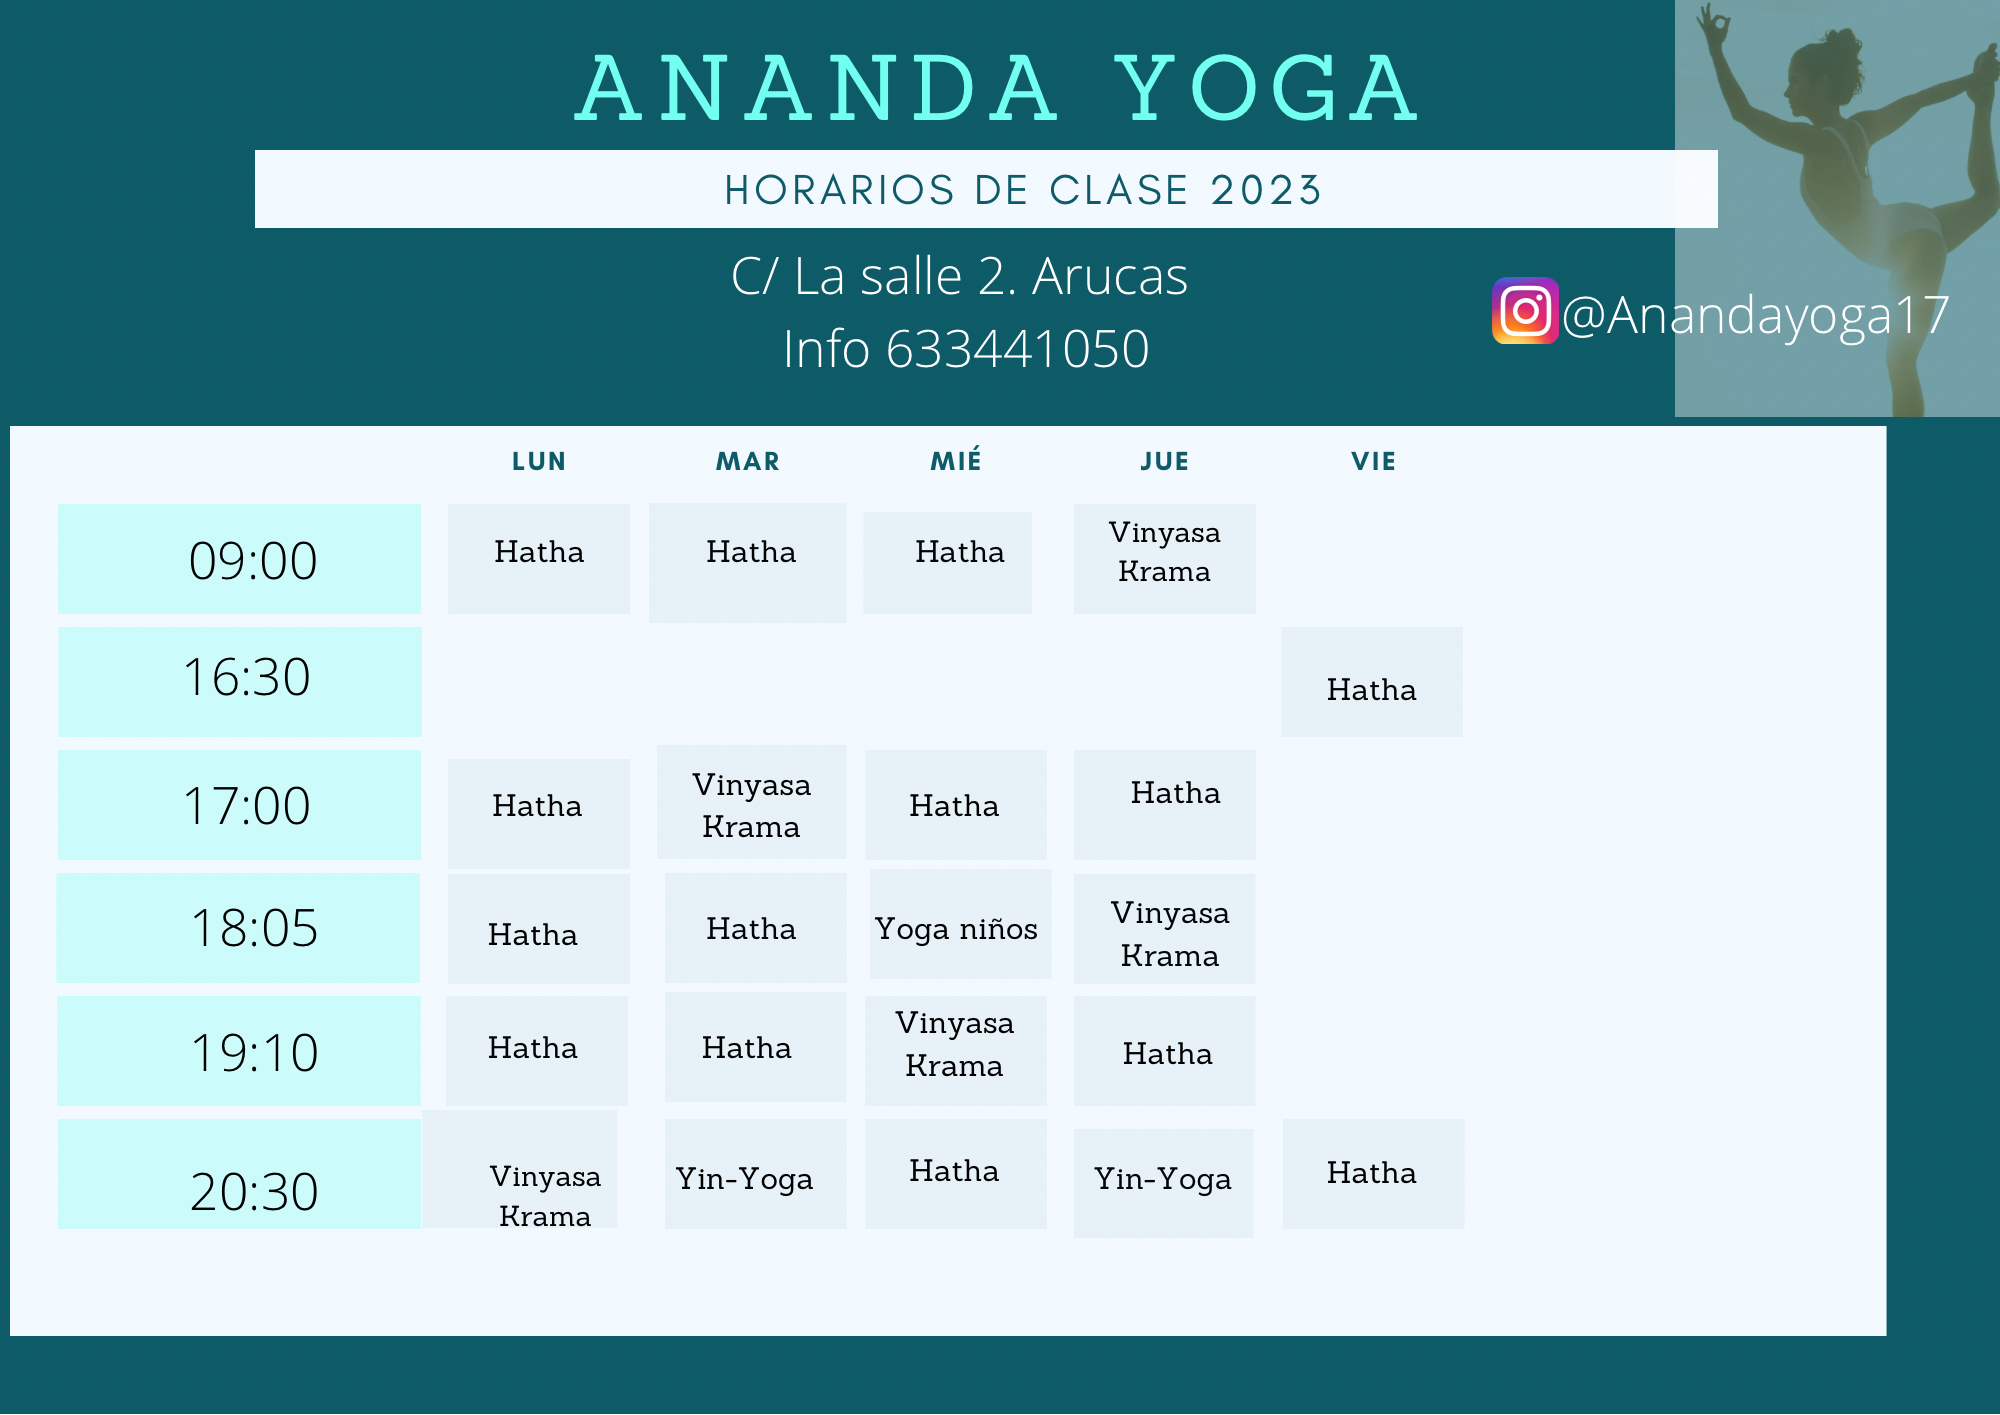 Images Ananda Yoga